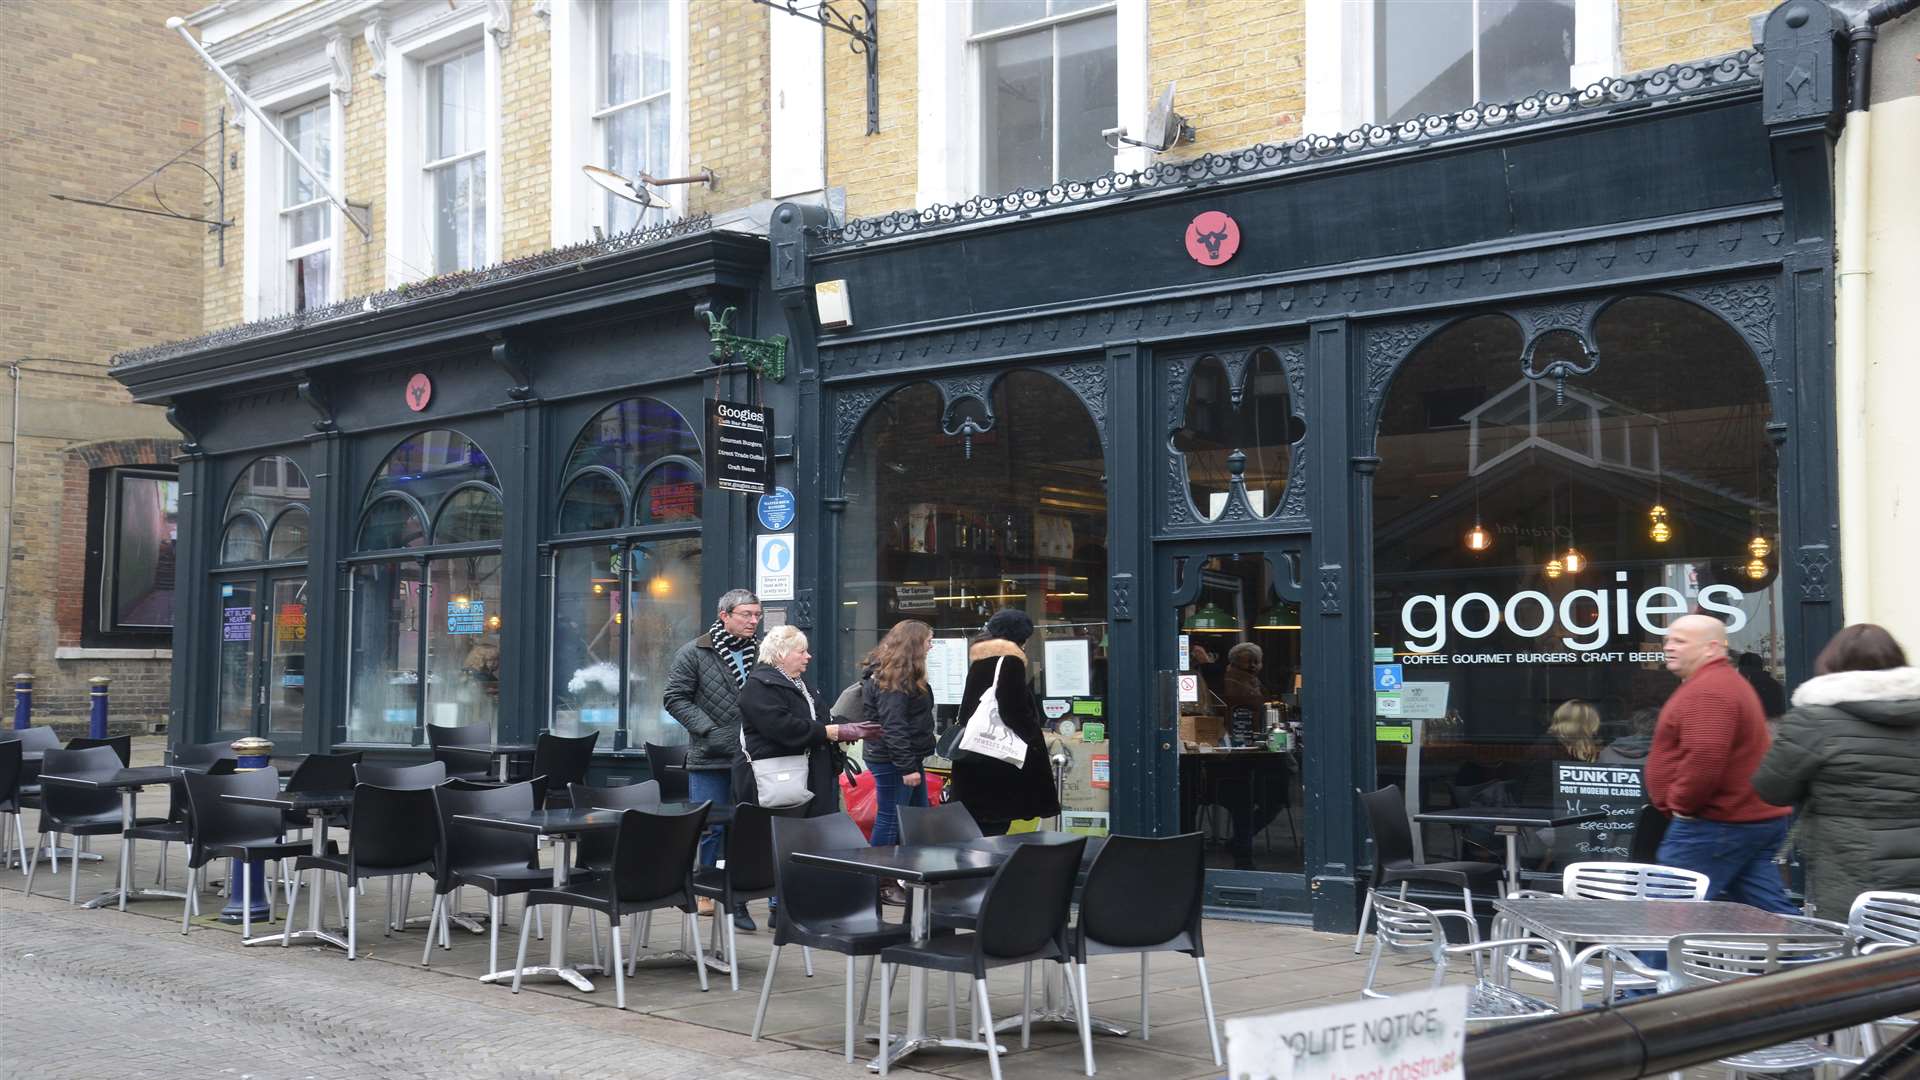 Googies Art Cafe in Folkestone is closing